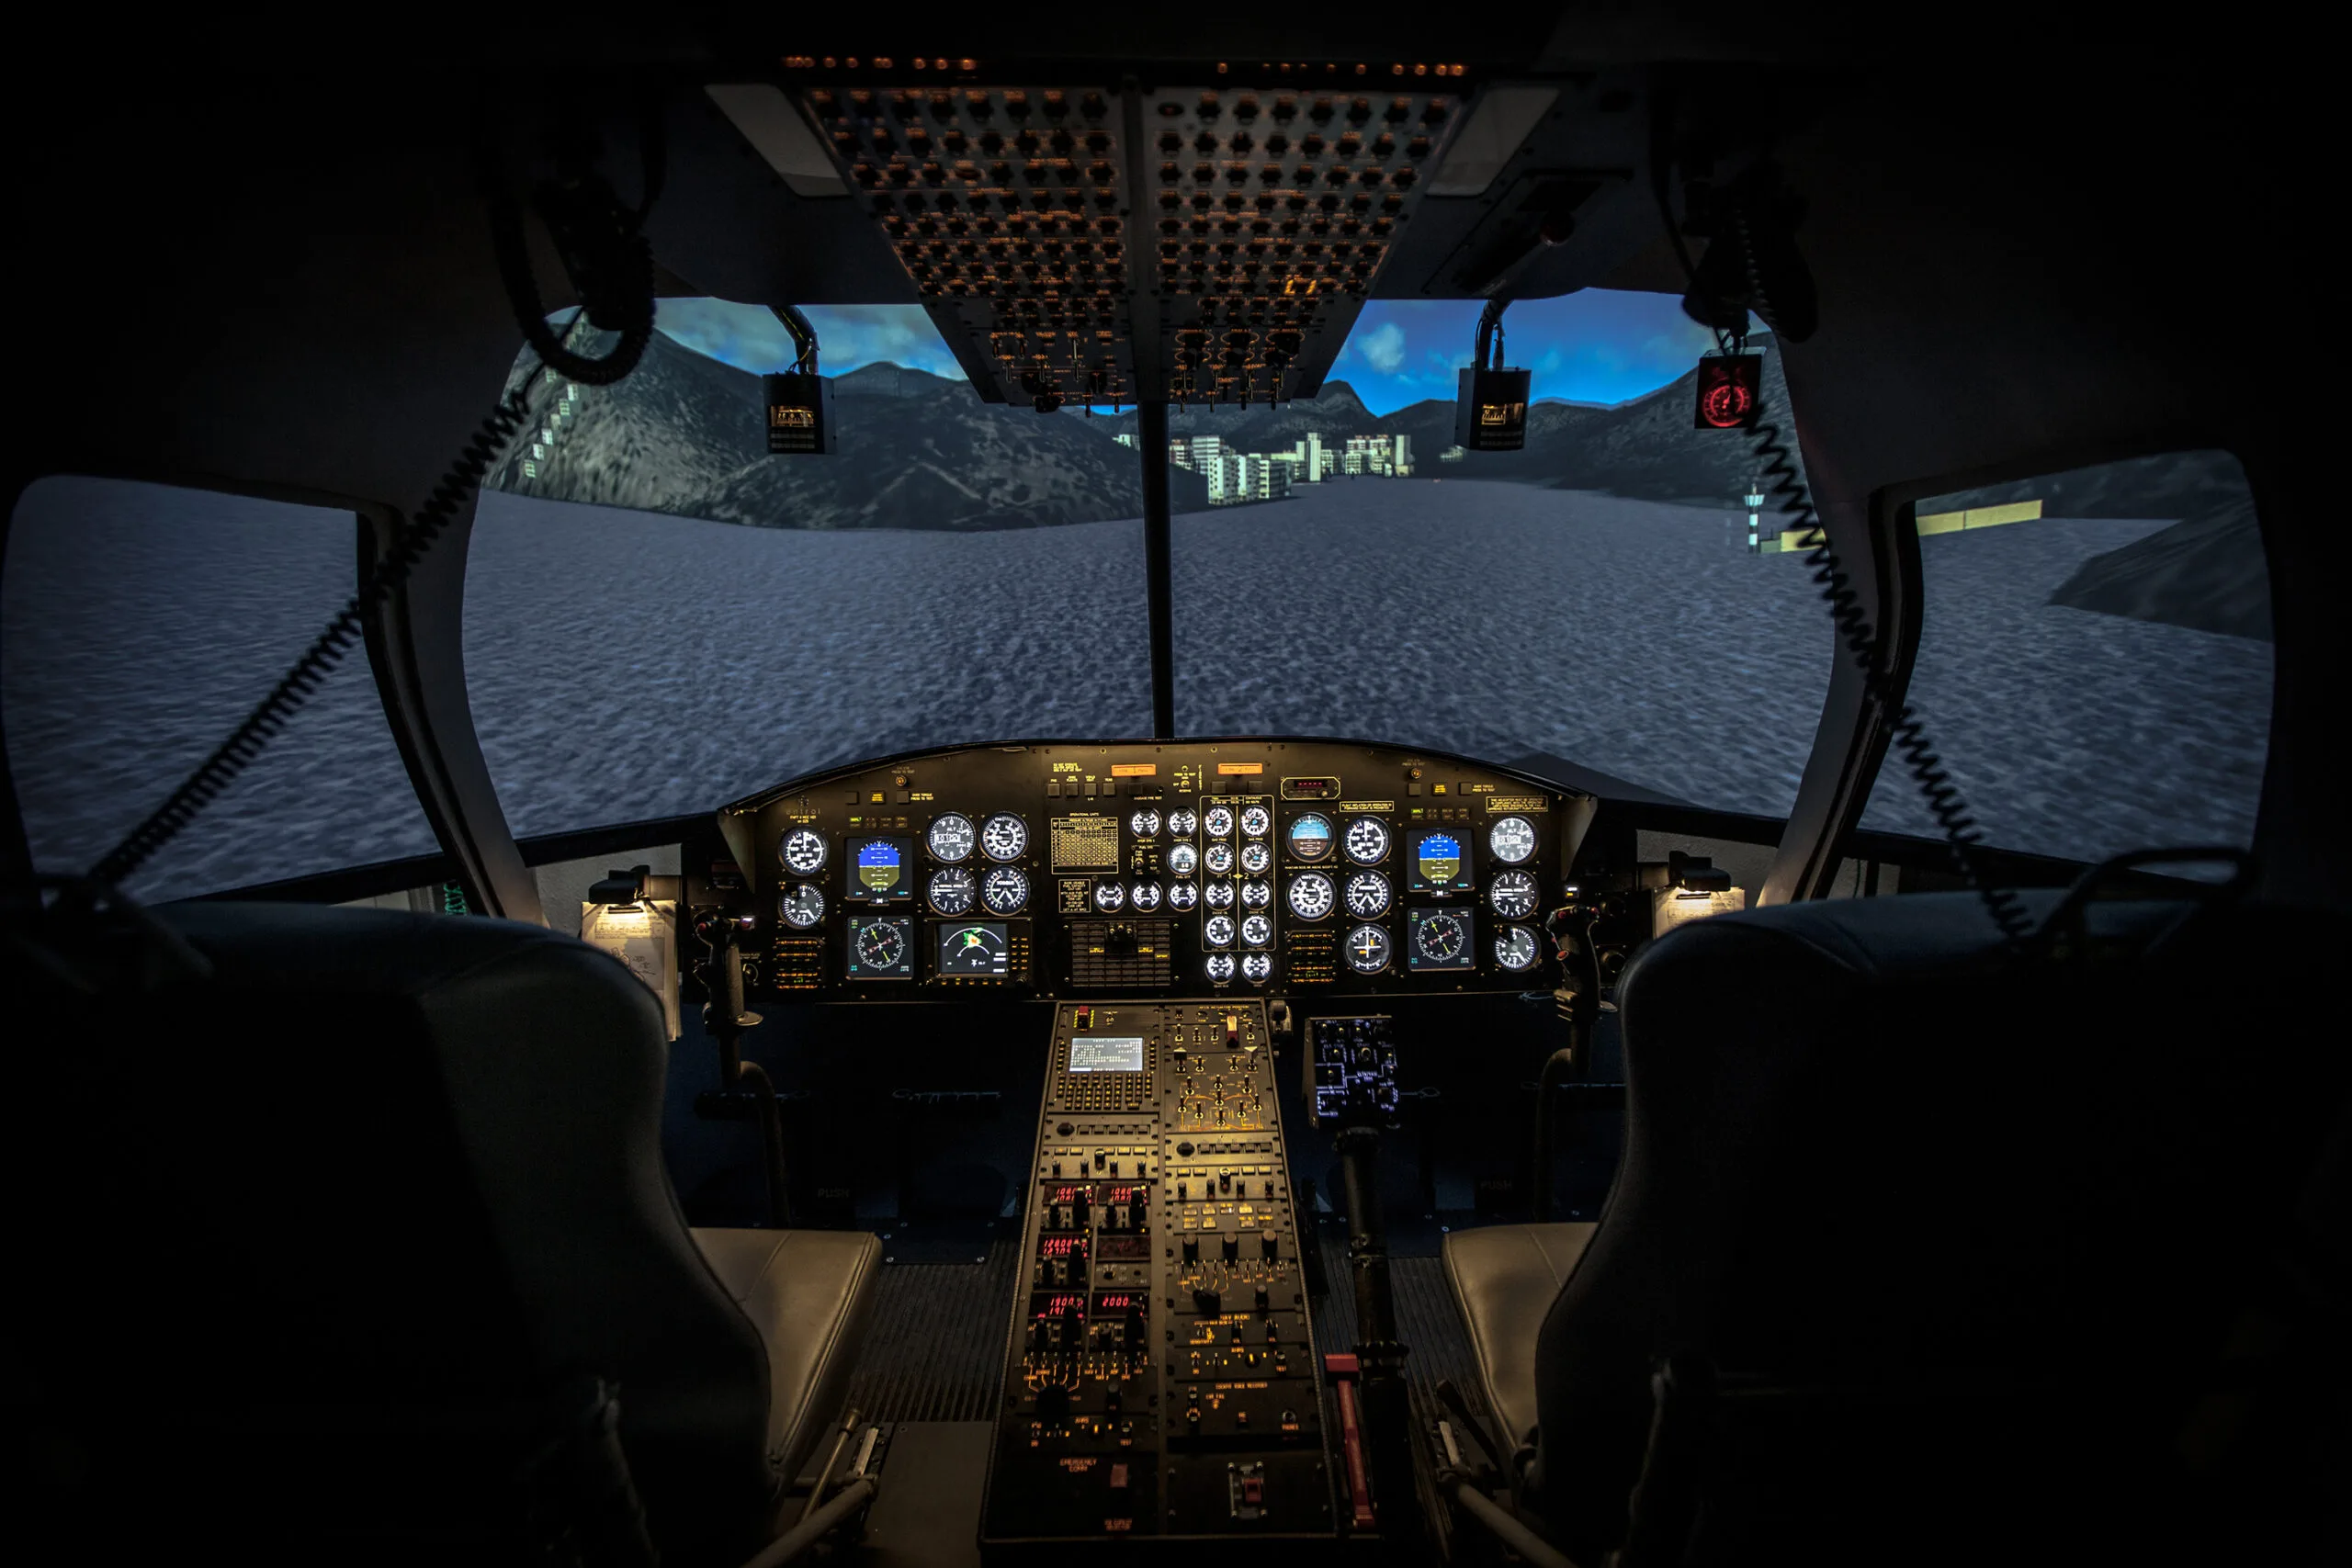 Bell 412 simulator cockpit